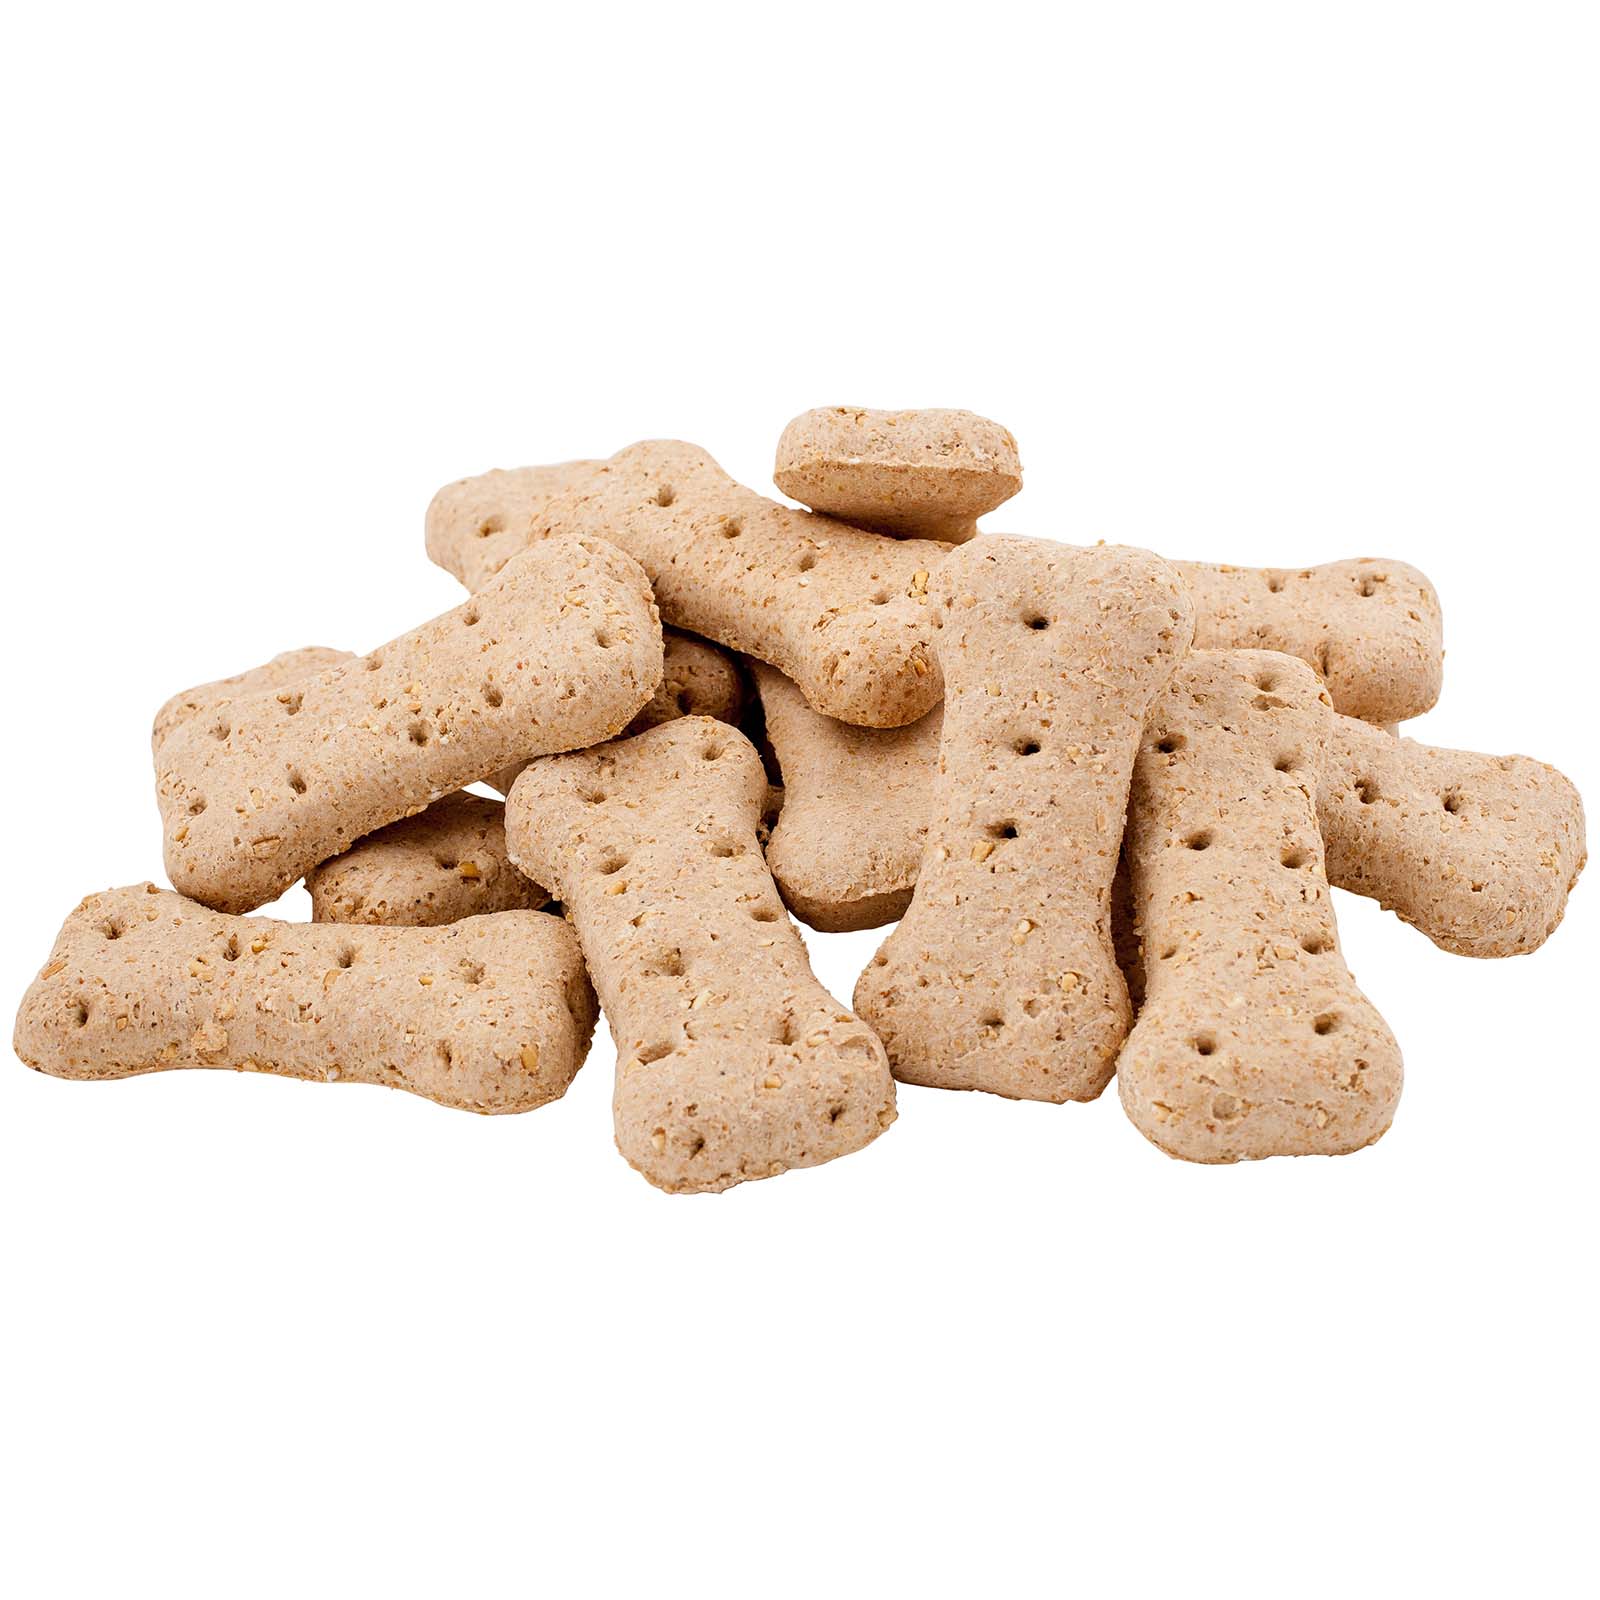 Vitalitae Superfood & Hemp Oil Dog Treats - Skin & Coat Biscuits - 350g image 1